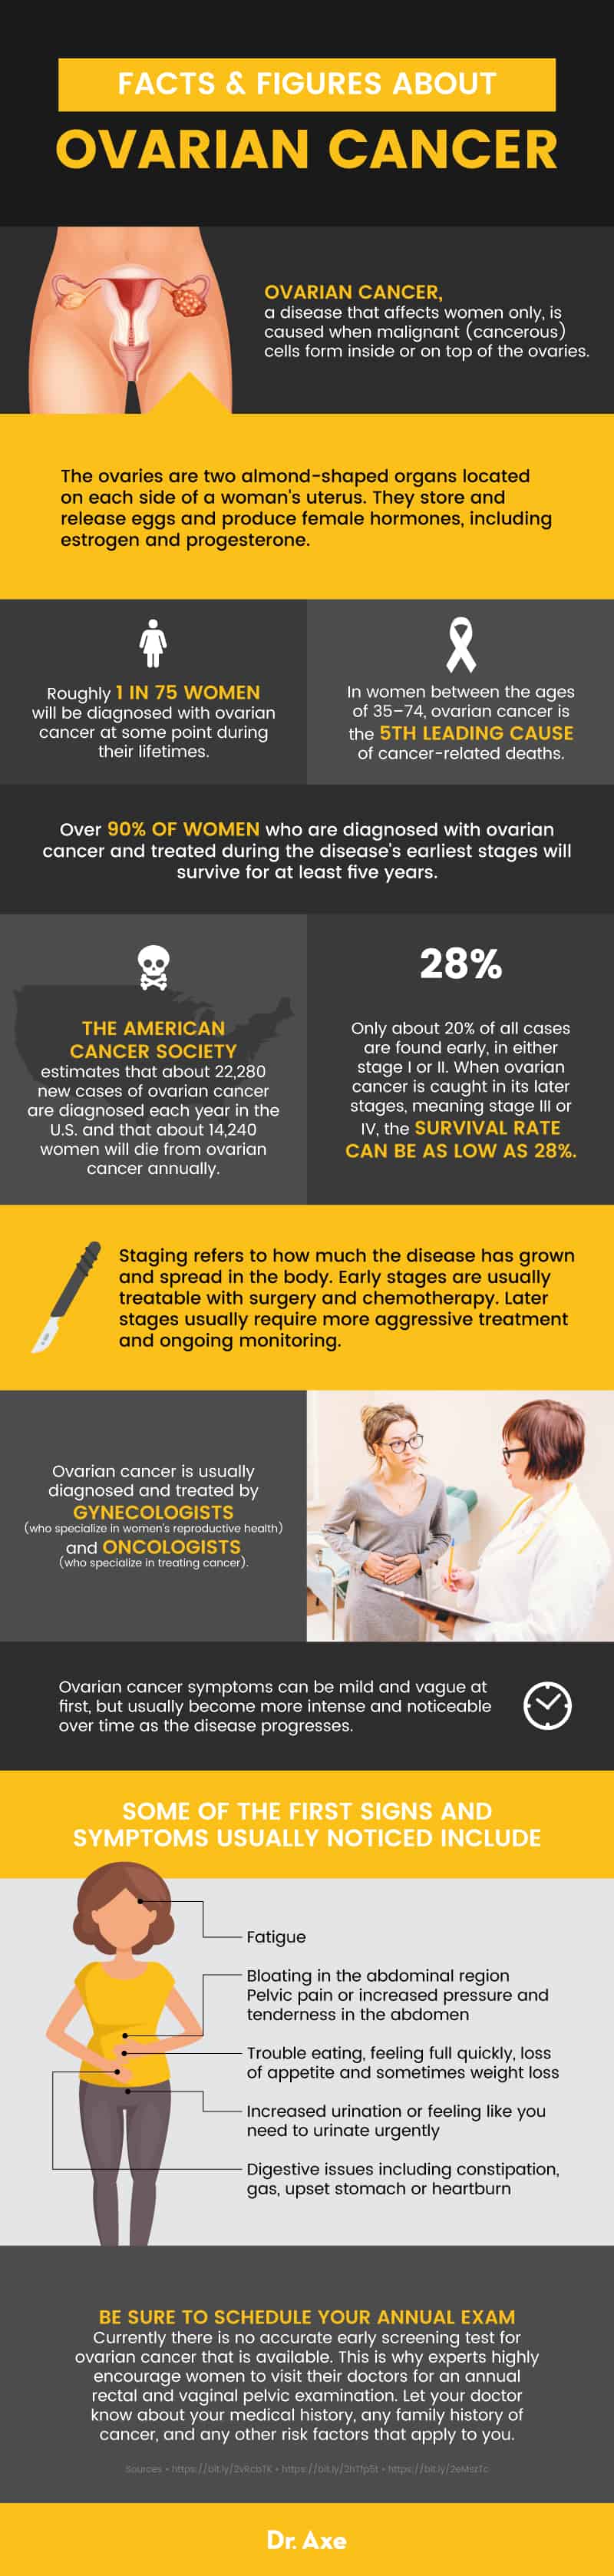 Ovarian cancer symptoms - Dr. Axe